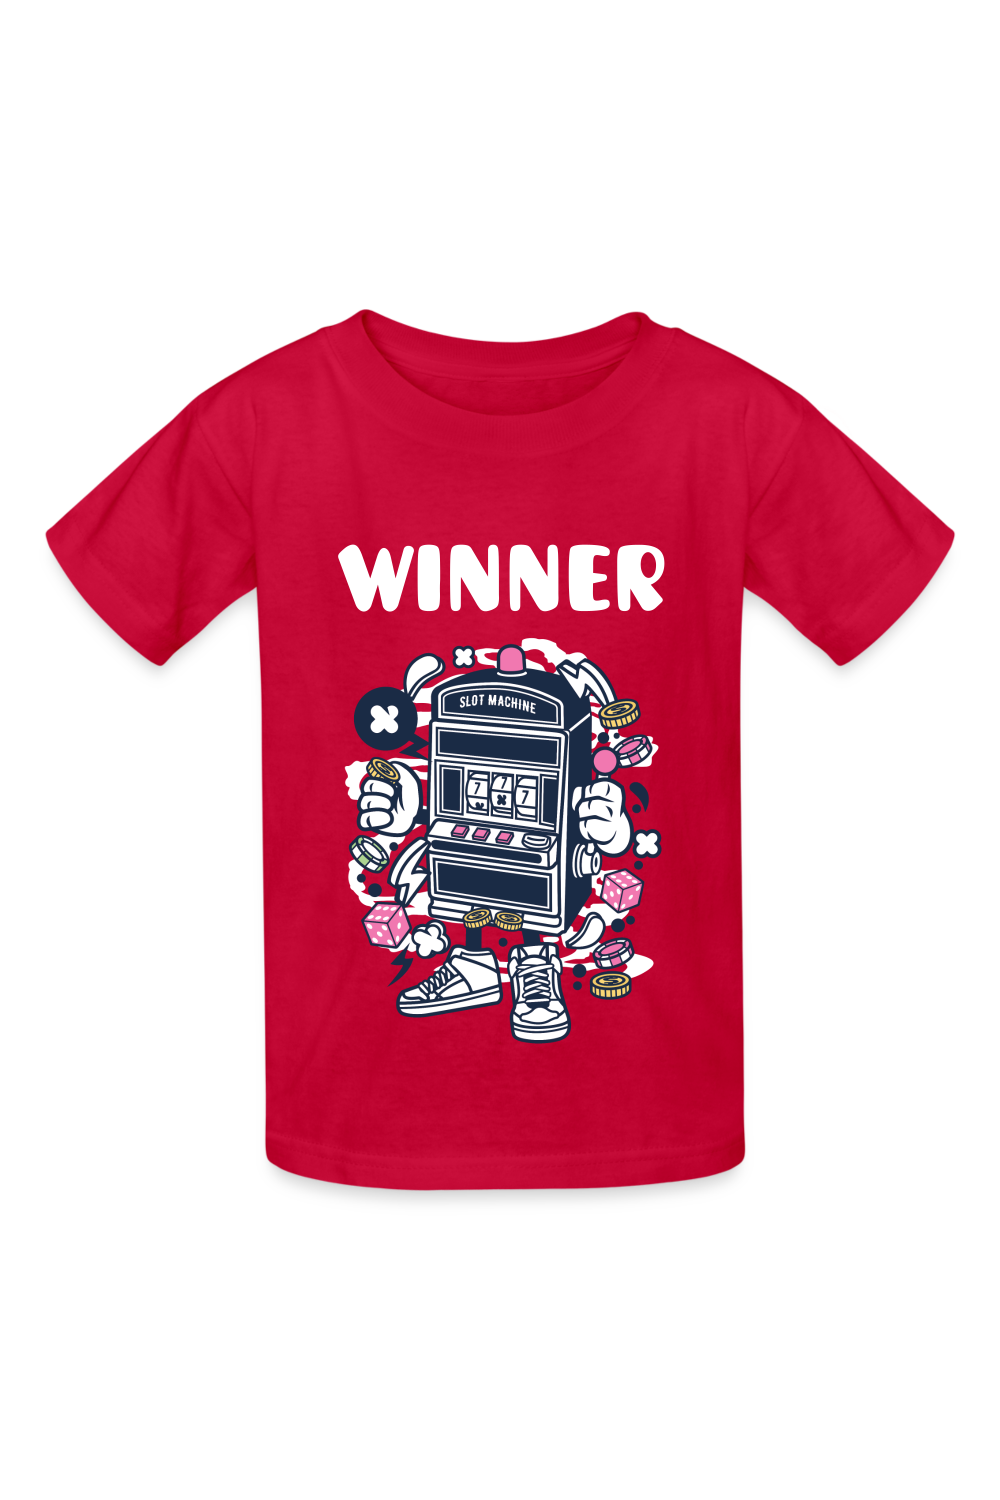 Boys Winner Slot Machine Short Sleeve T-Shirt - red - NicholesGifts.online